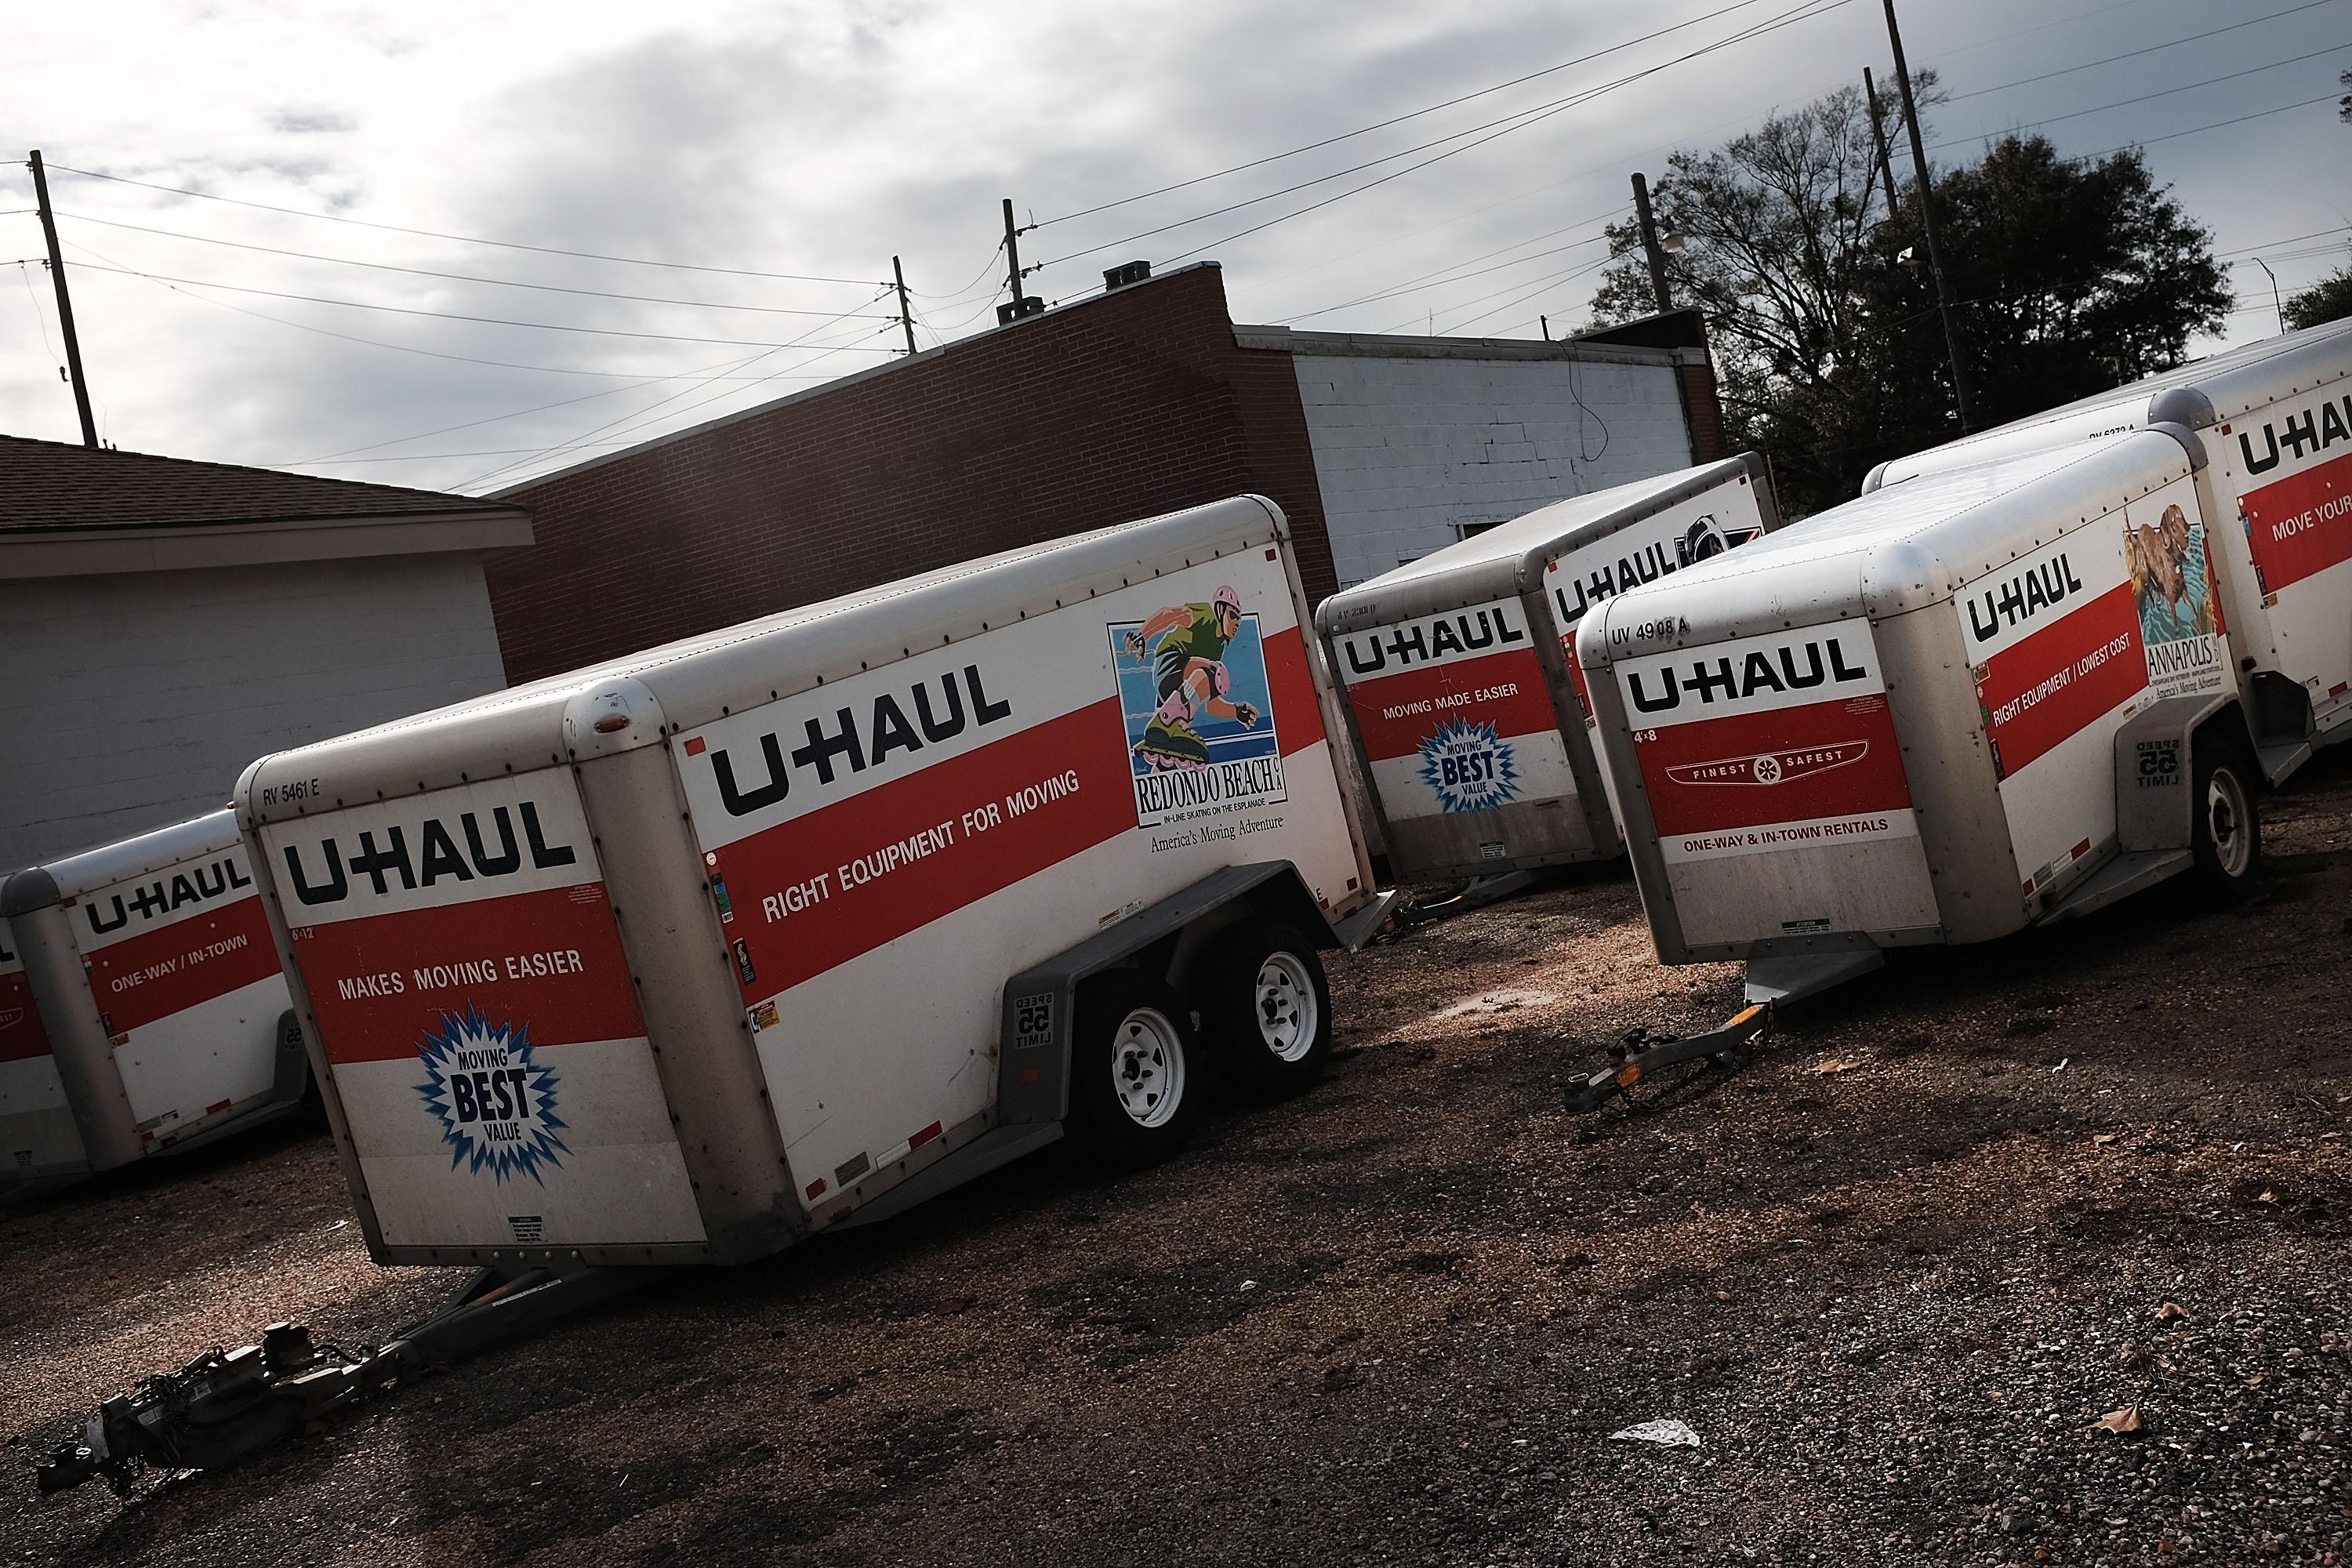 U-Haul trailers in a parking lot